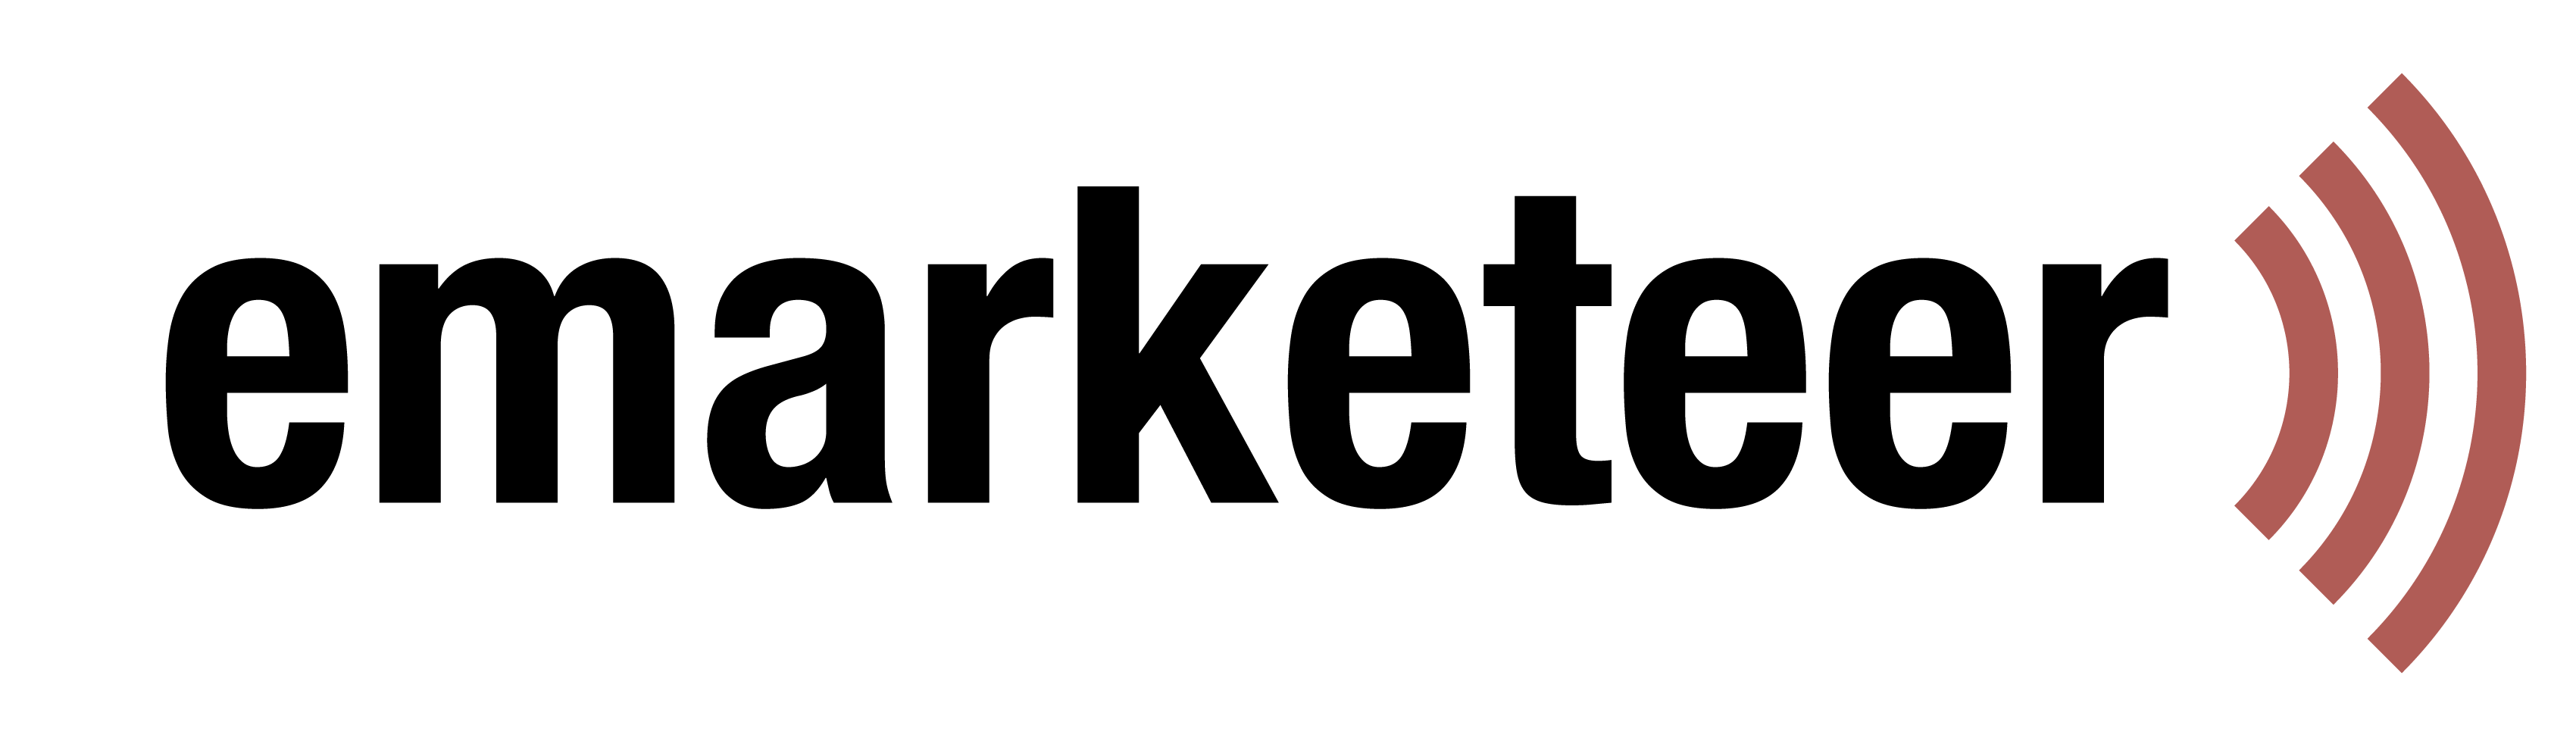 Emarketeer integration logo.